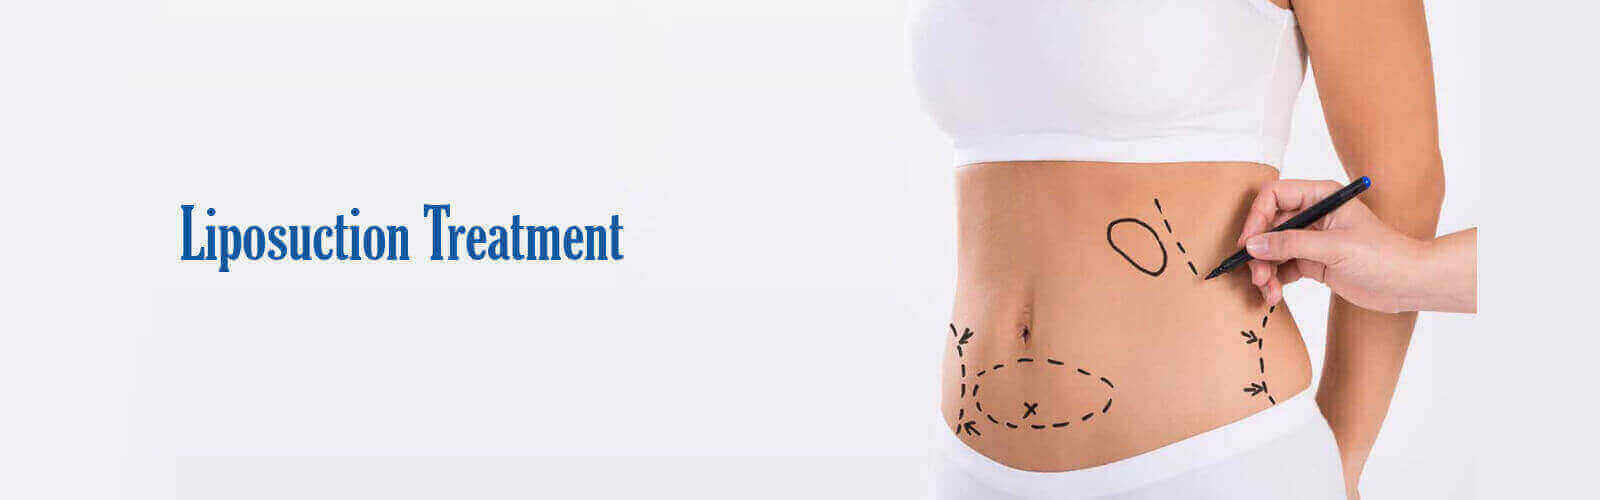 Liposuction Treatment in Canada